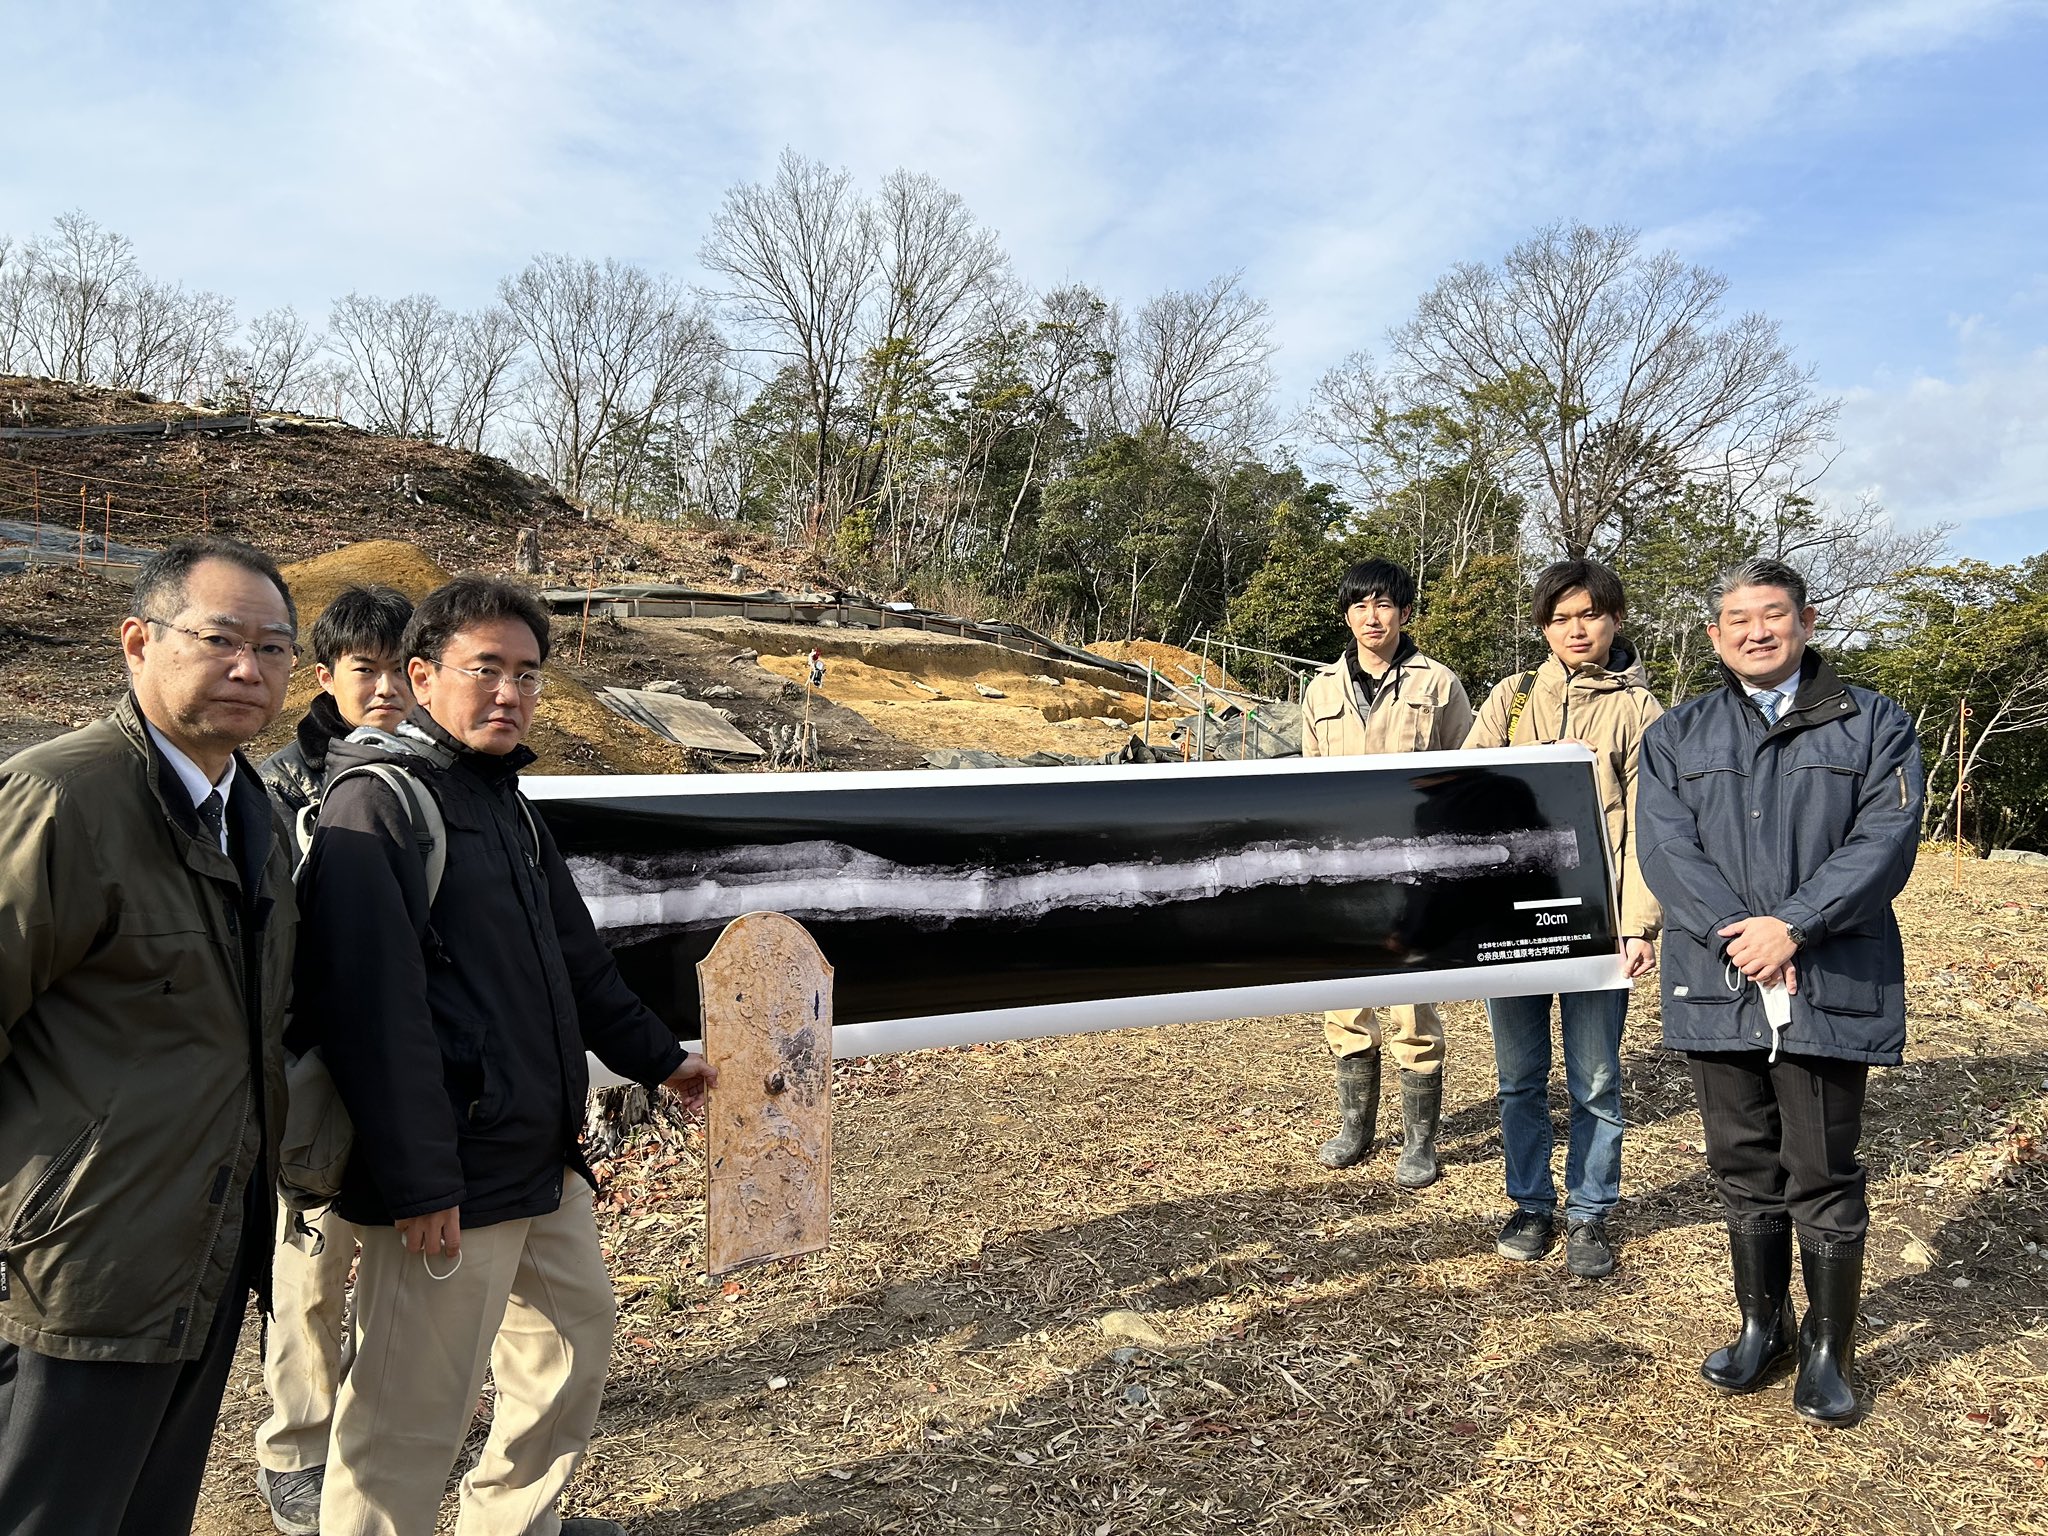 Longest sword in Japan found in 4th c. burial mound